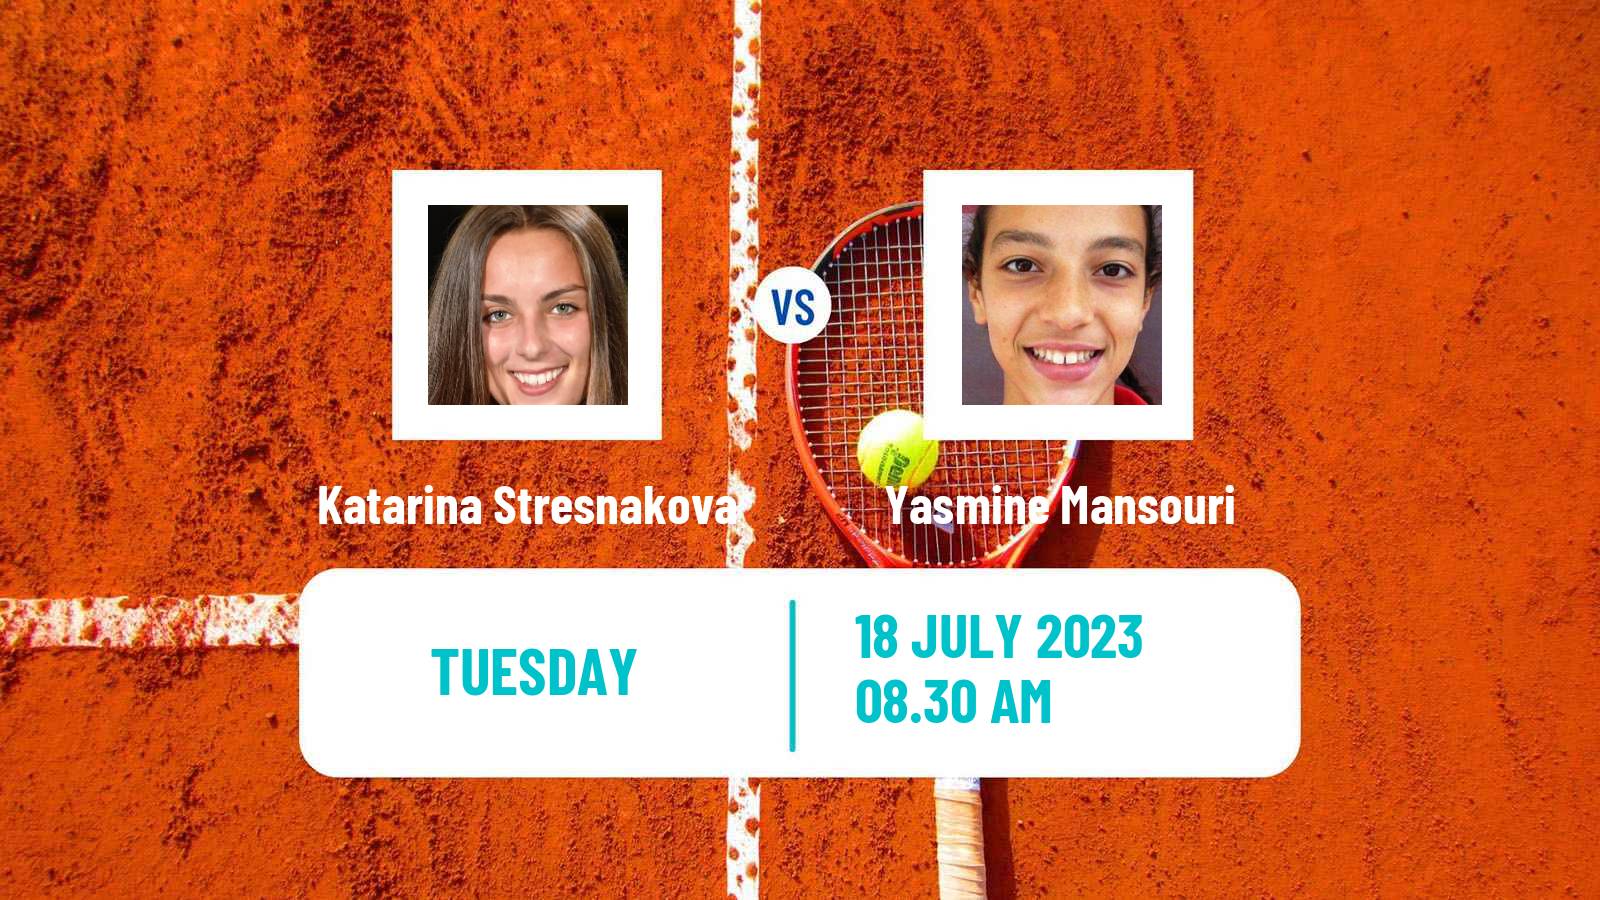 Tennis ITF W25 Roehampton Women Katarina Stresnakova - Yasmine Mansouri